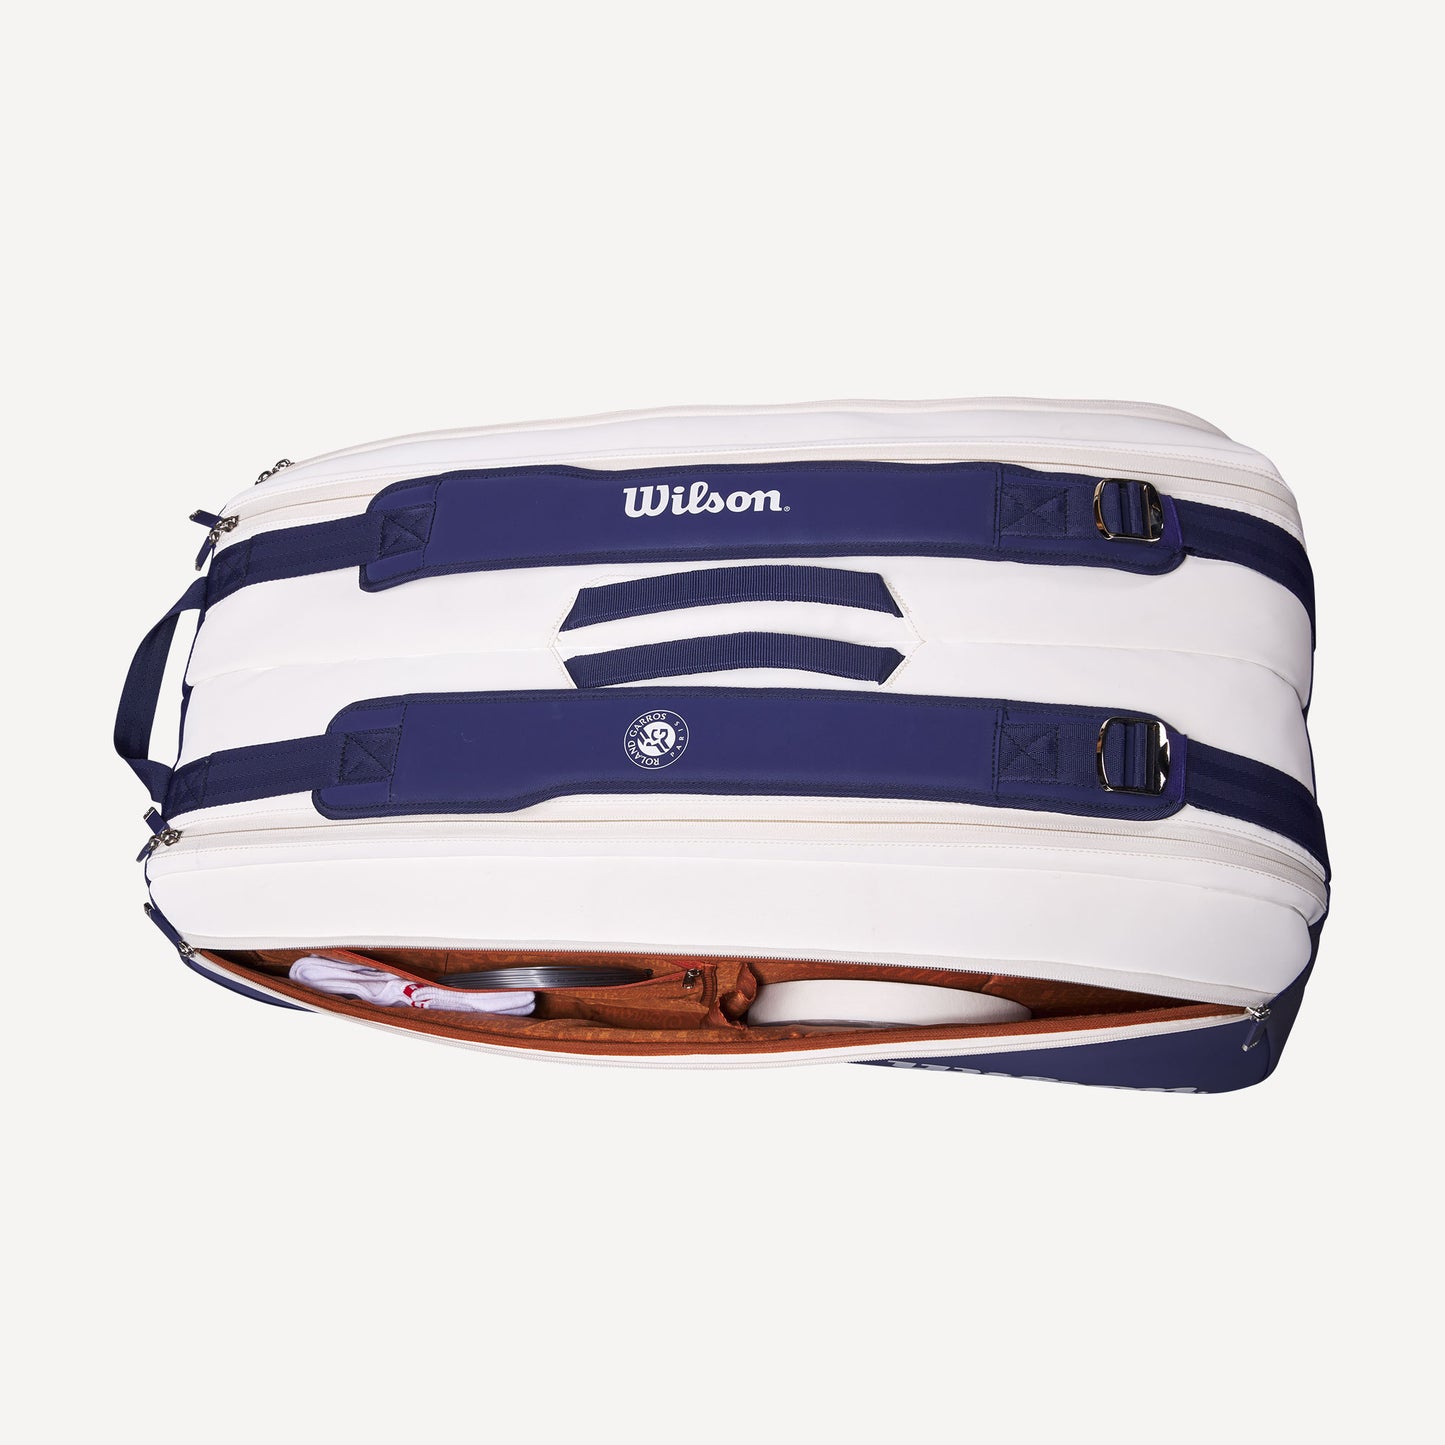 Wilson Roland-Garros Super Tour 9 Pack Tennis Bag Blue (5)